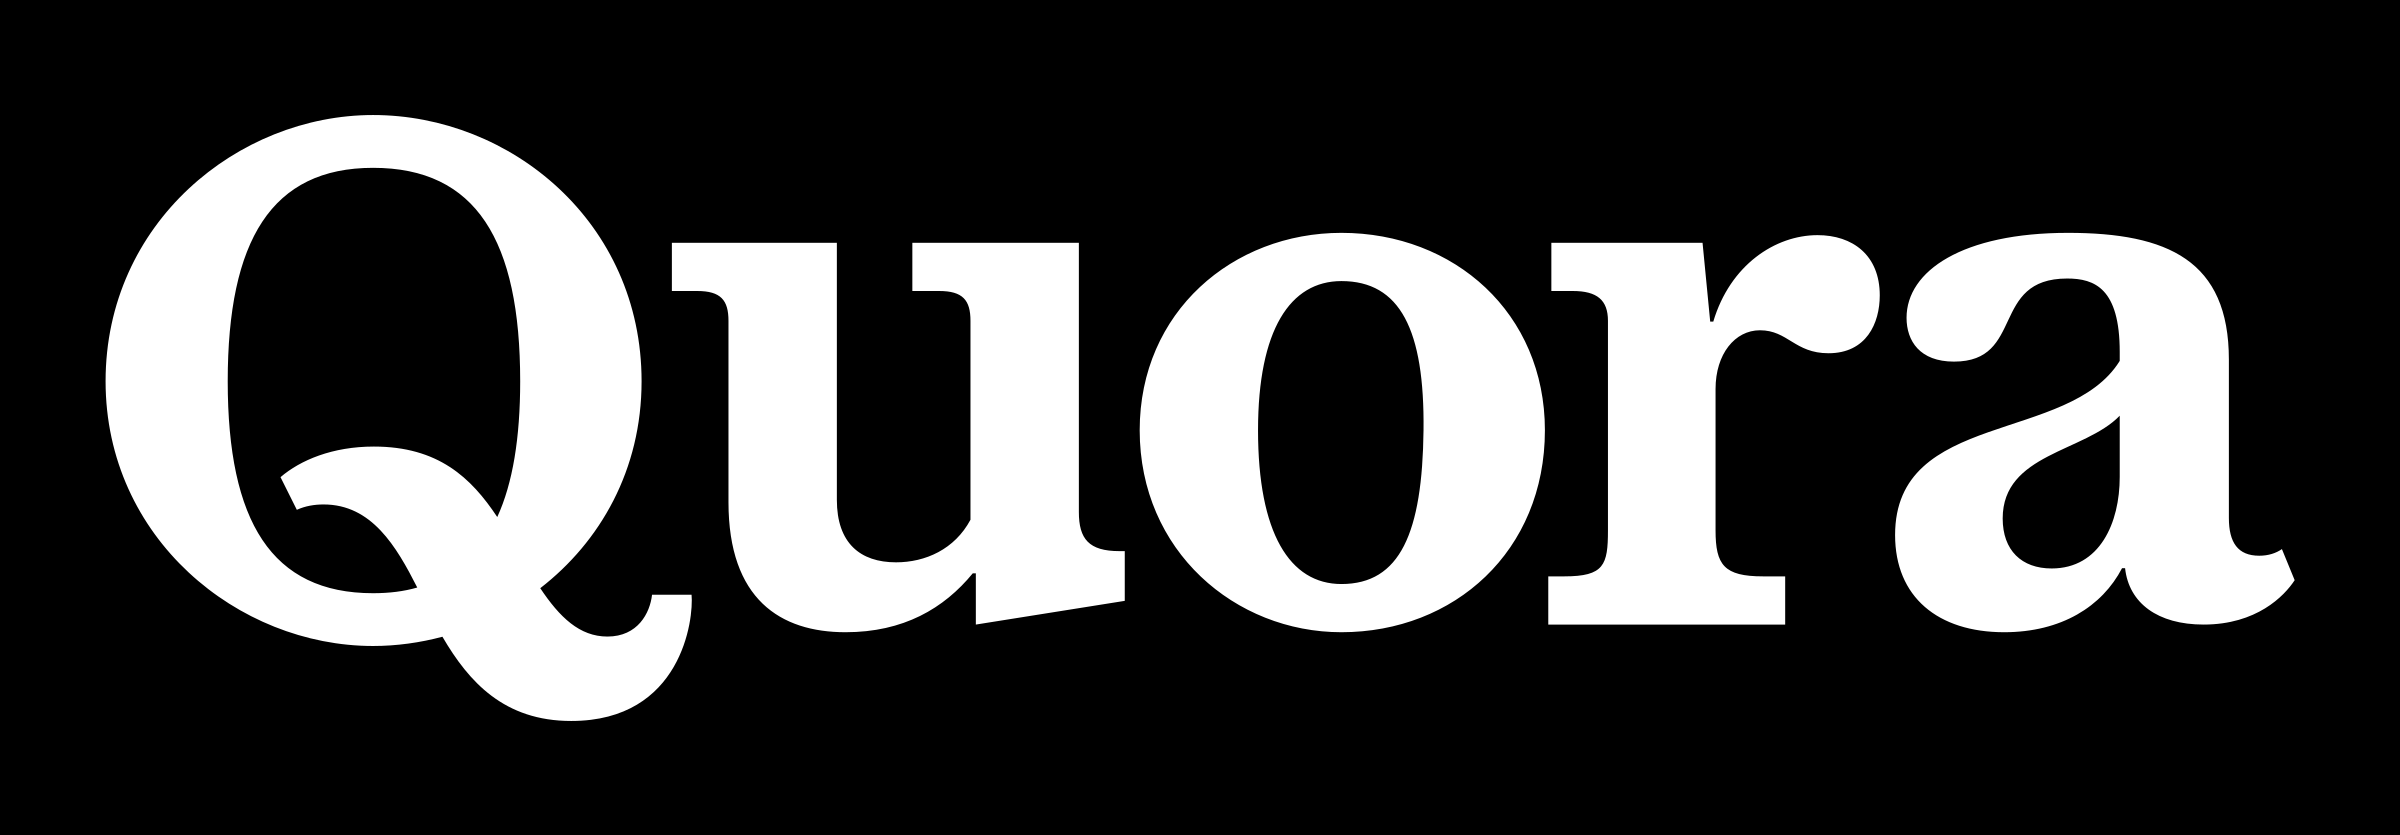 Quora Logo - Quora Logo PNG Transparent & SVG Vector - Freebie Supply